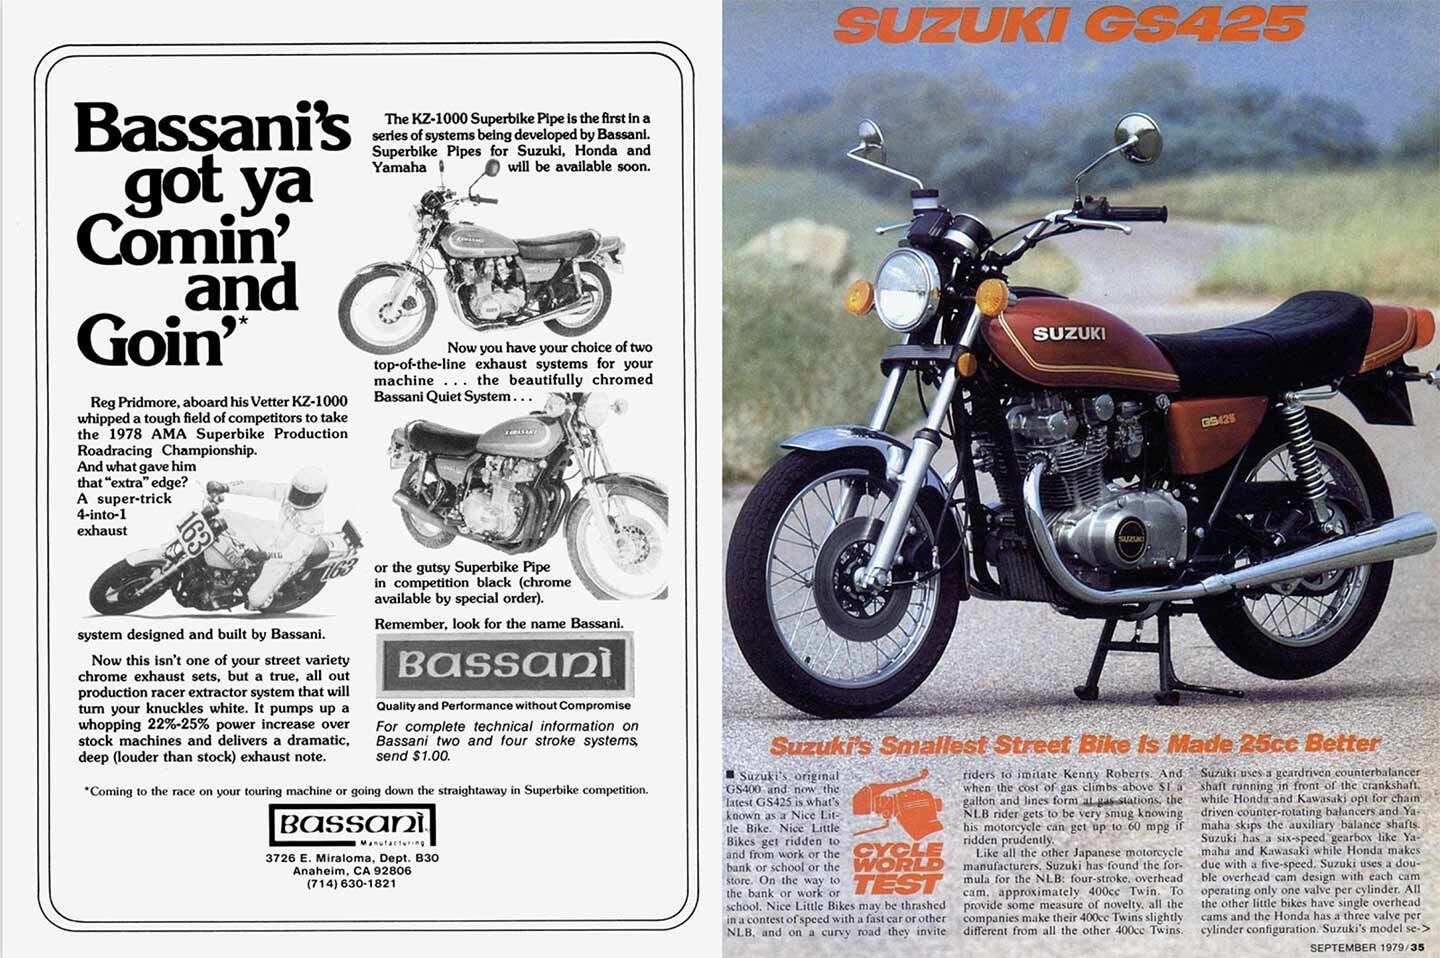 <i>Cycle World</i> review of the underwhelming 1979 Suzuki GS425. But check the cool Bassani ad featuring AMA Superbike champion Reg Pridmore’s Kawasaki KZ1000.